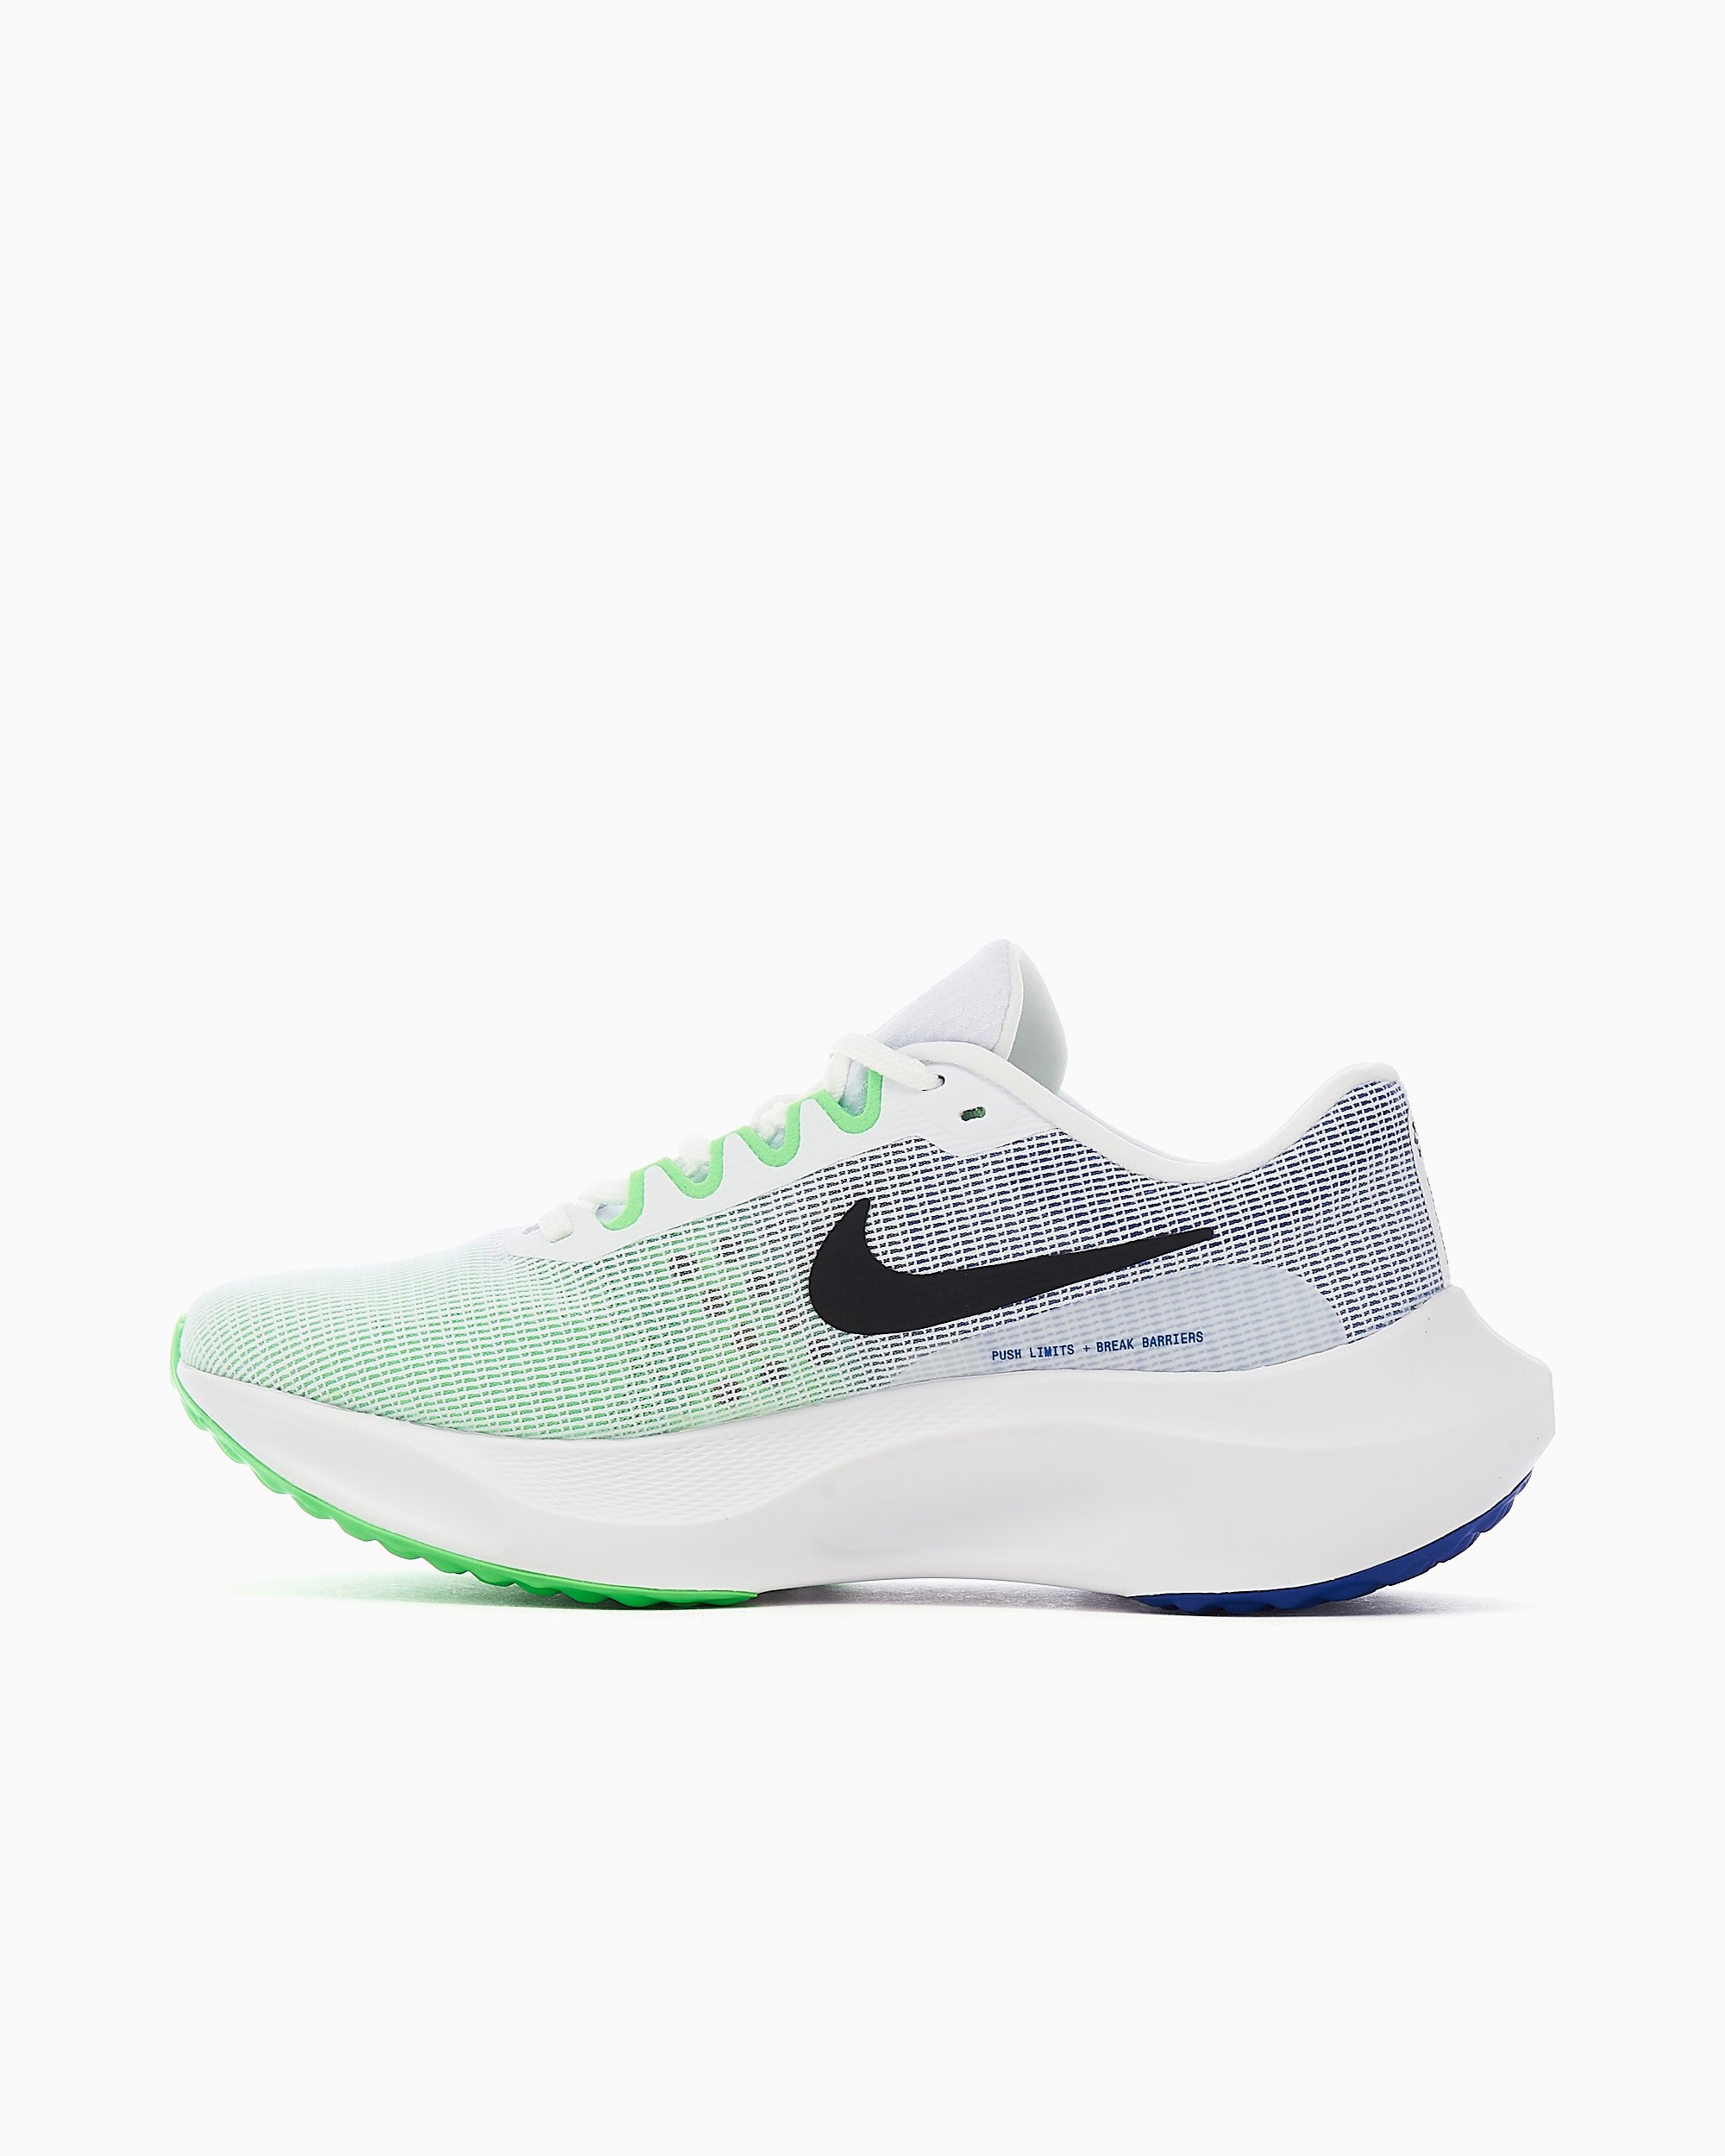 Nike Zoom Fly 5 Black, Green, White DM8968-101| Buy Online at FOOTDISTRICT